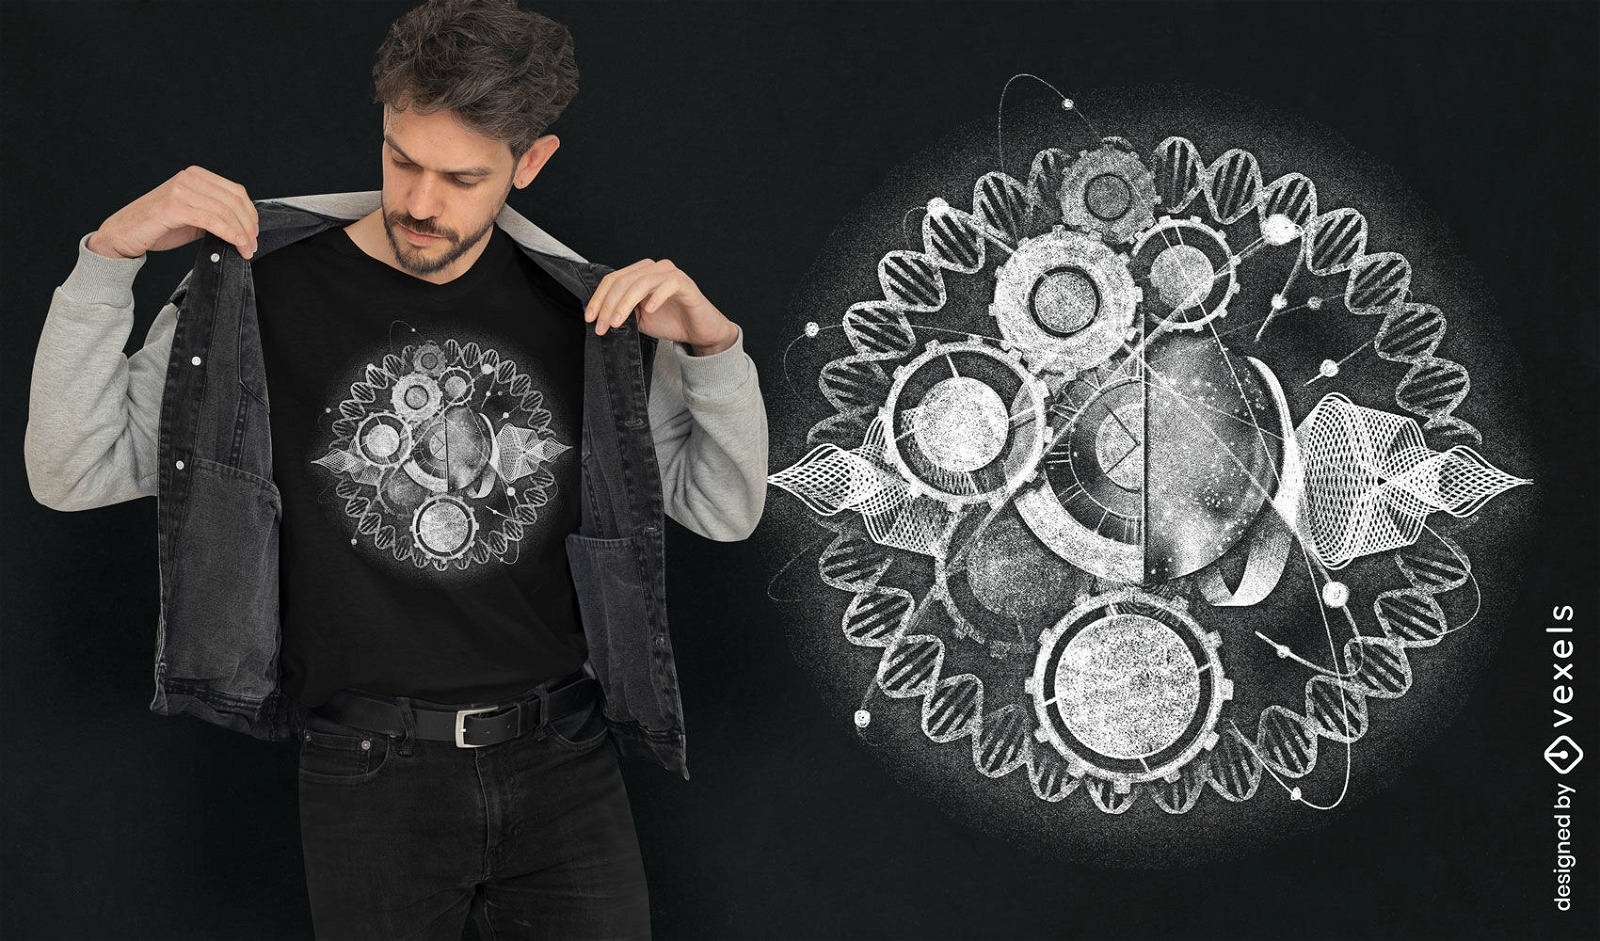 Diseño de camiseta de reloj del universo.